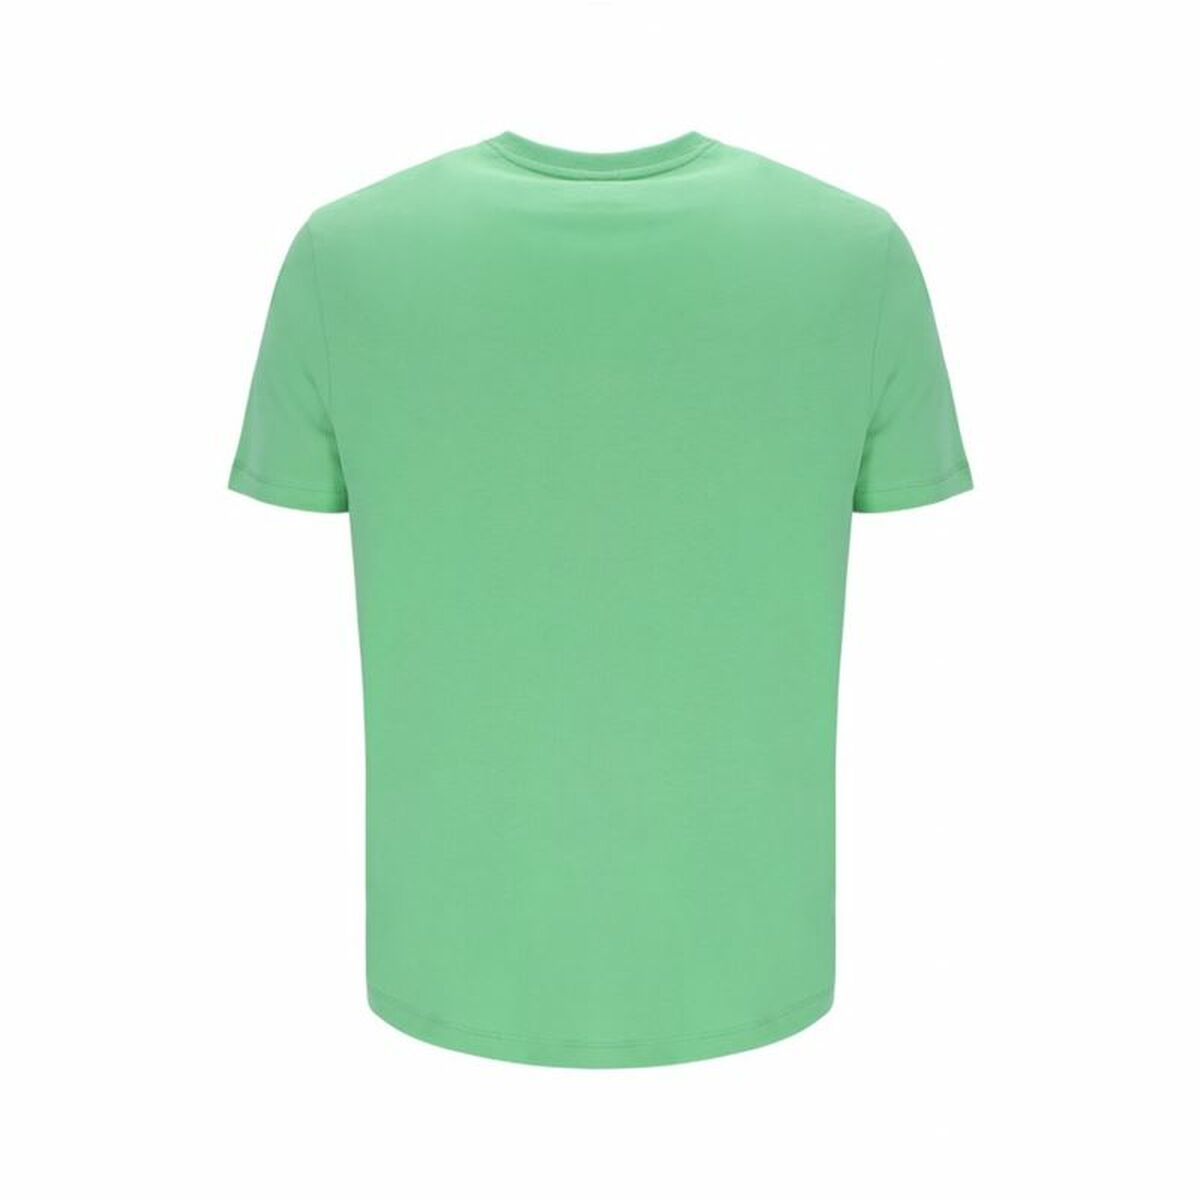 Short Sleeve T-Shirt Russell Athletic Amt A30421 Green Men